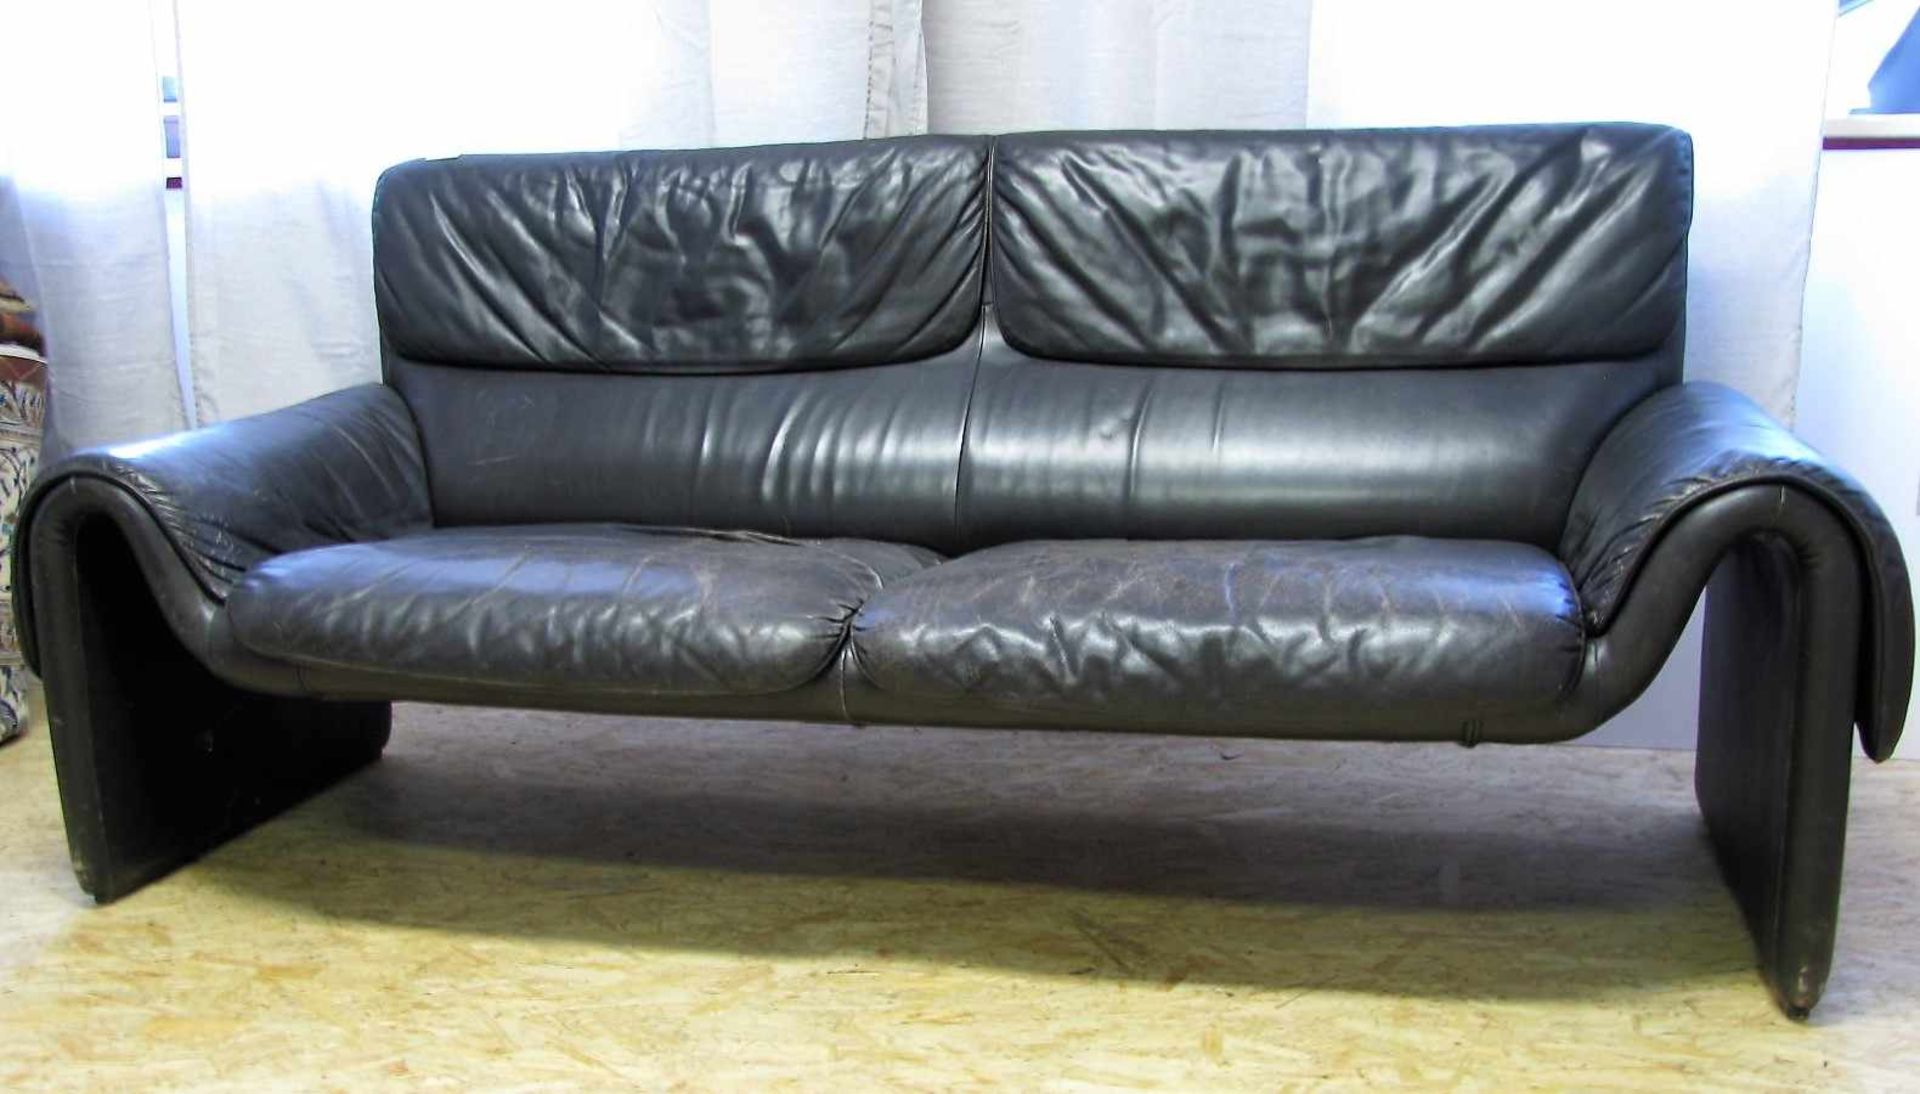 Designer-Sofa, De Sede, Modell DS 2011, Zweisitzer, schwarzes Leder, 81 x 190 x 80 cm.- - -19.00 % - Bild 2 aus 3